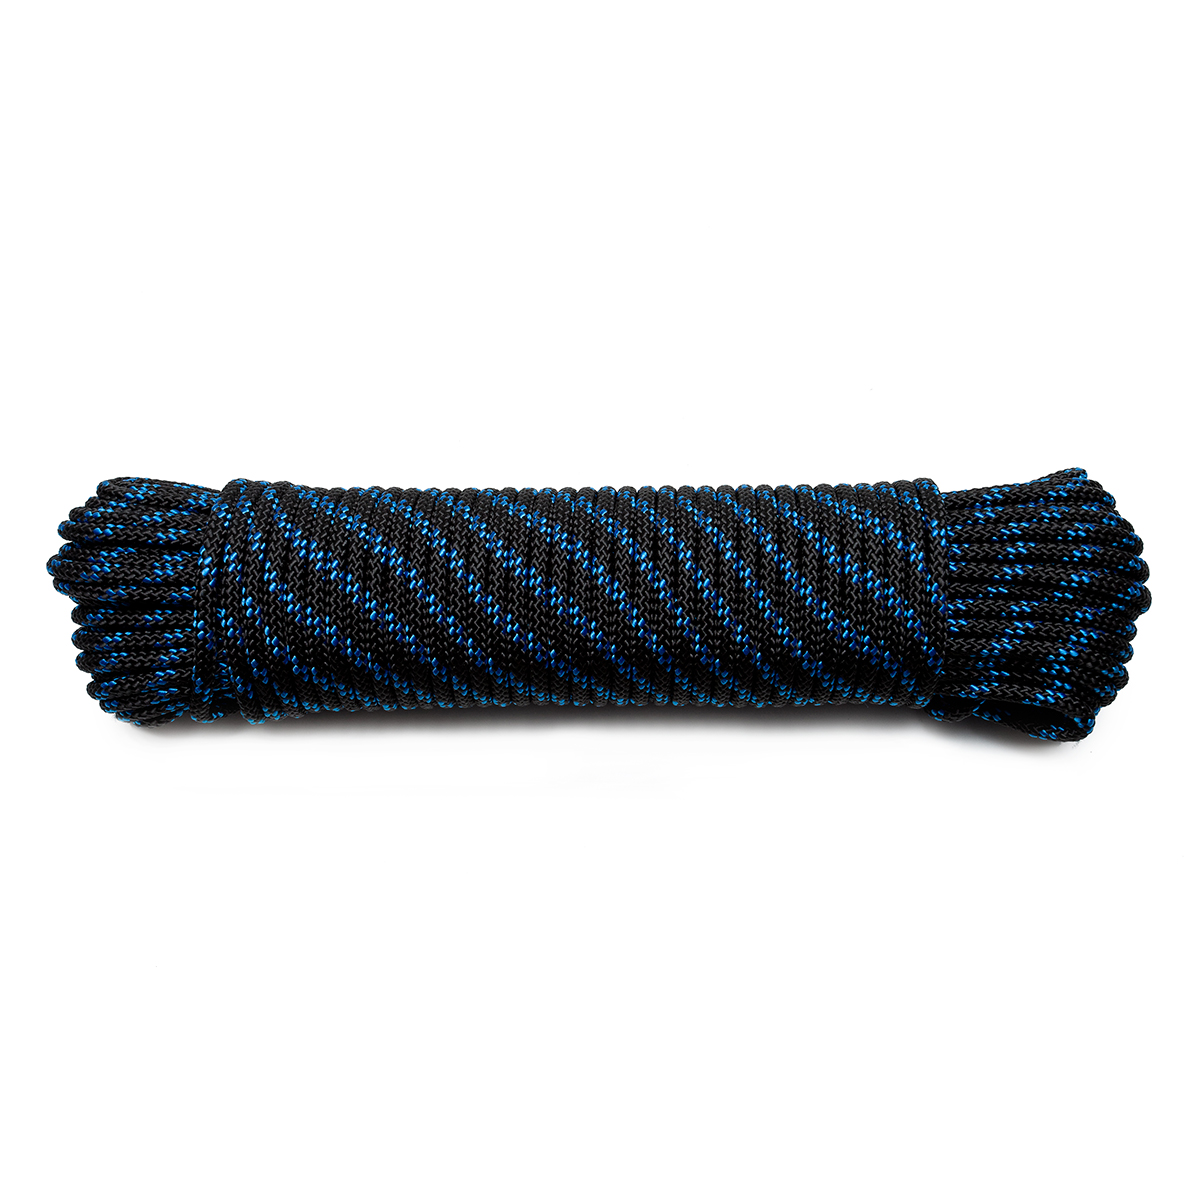 Шнур плетеный якорный Петроканат 8.0 мм, черно-синий, 850 кг, 30 м